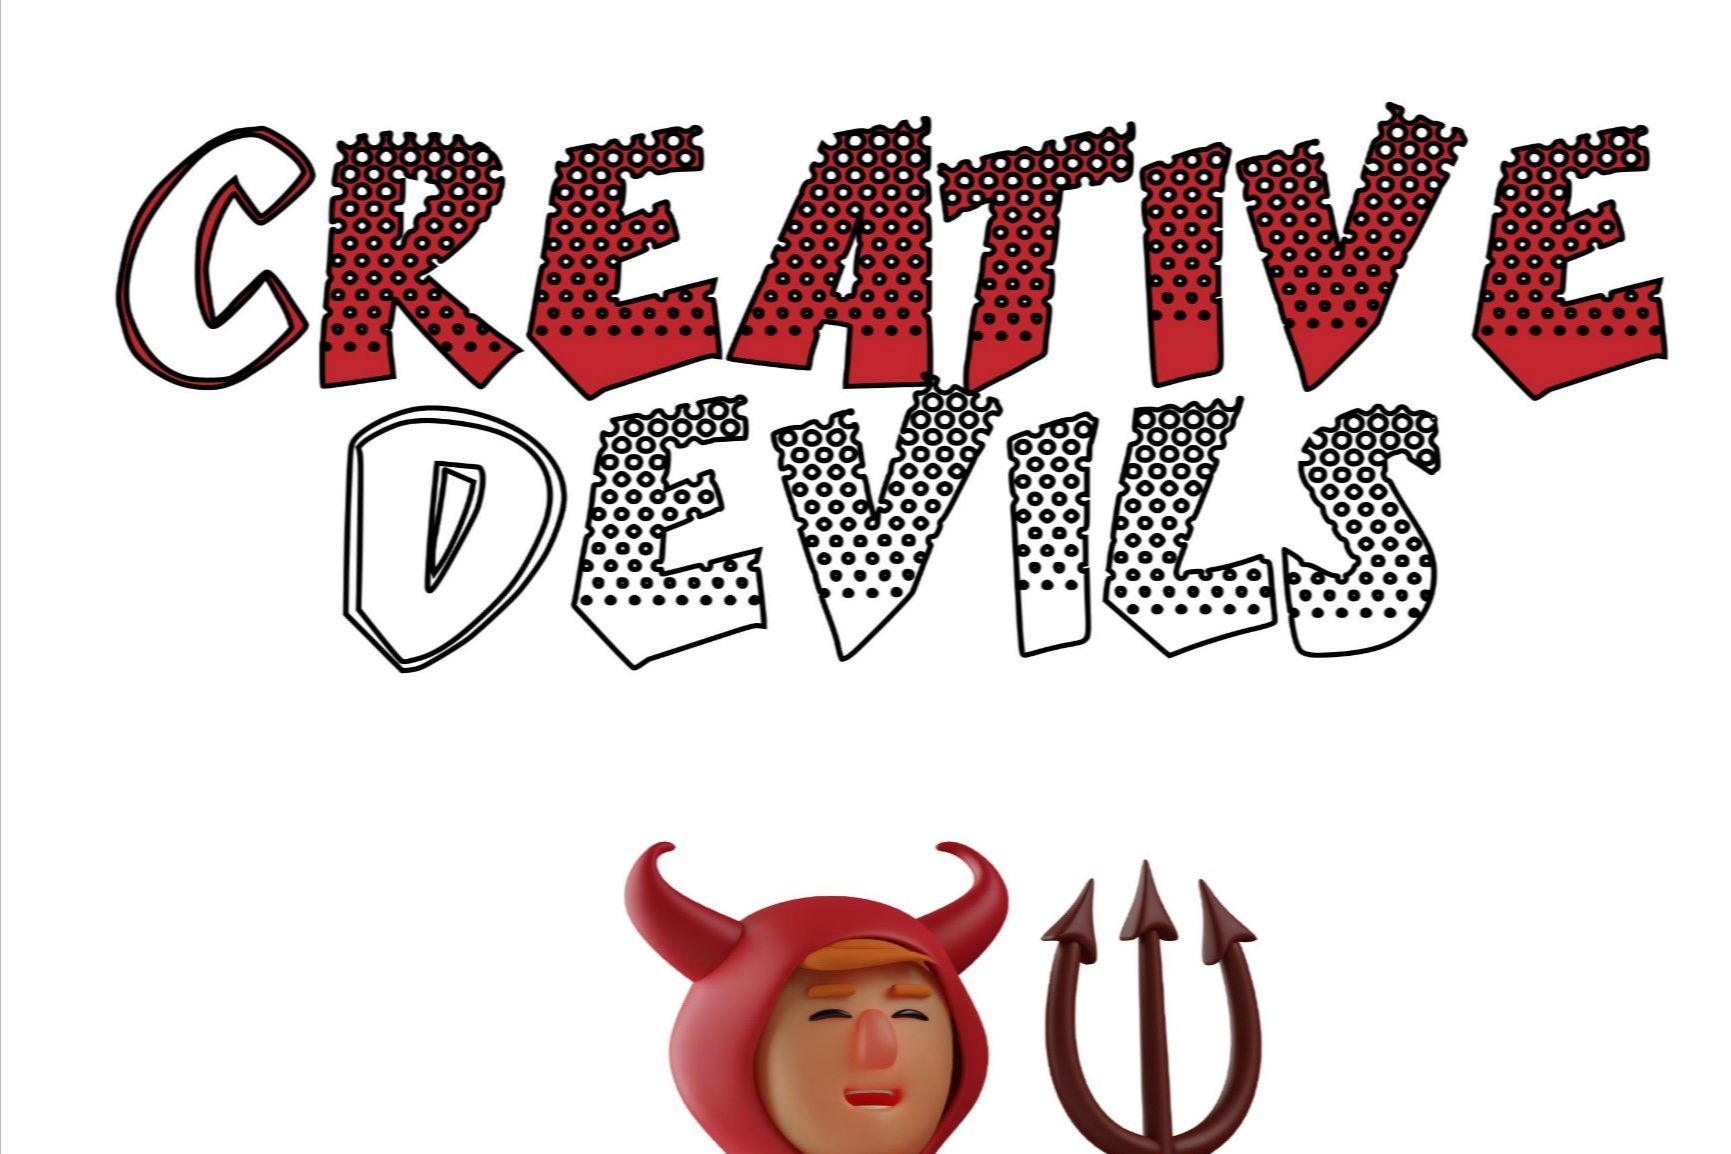 Creative Devils and a devil